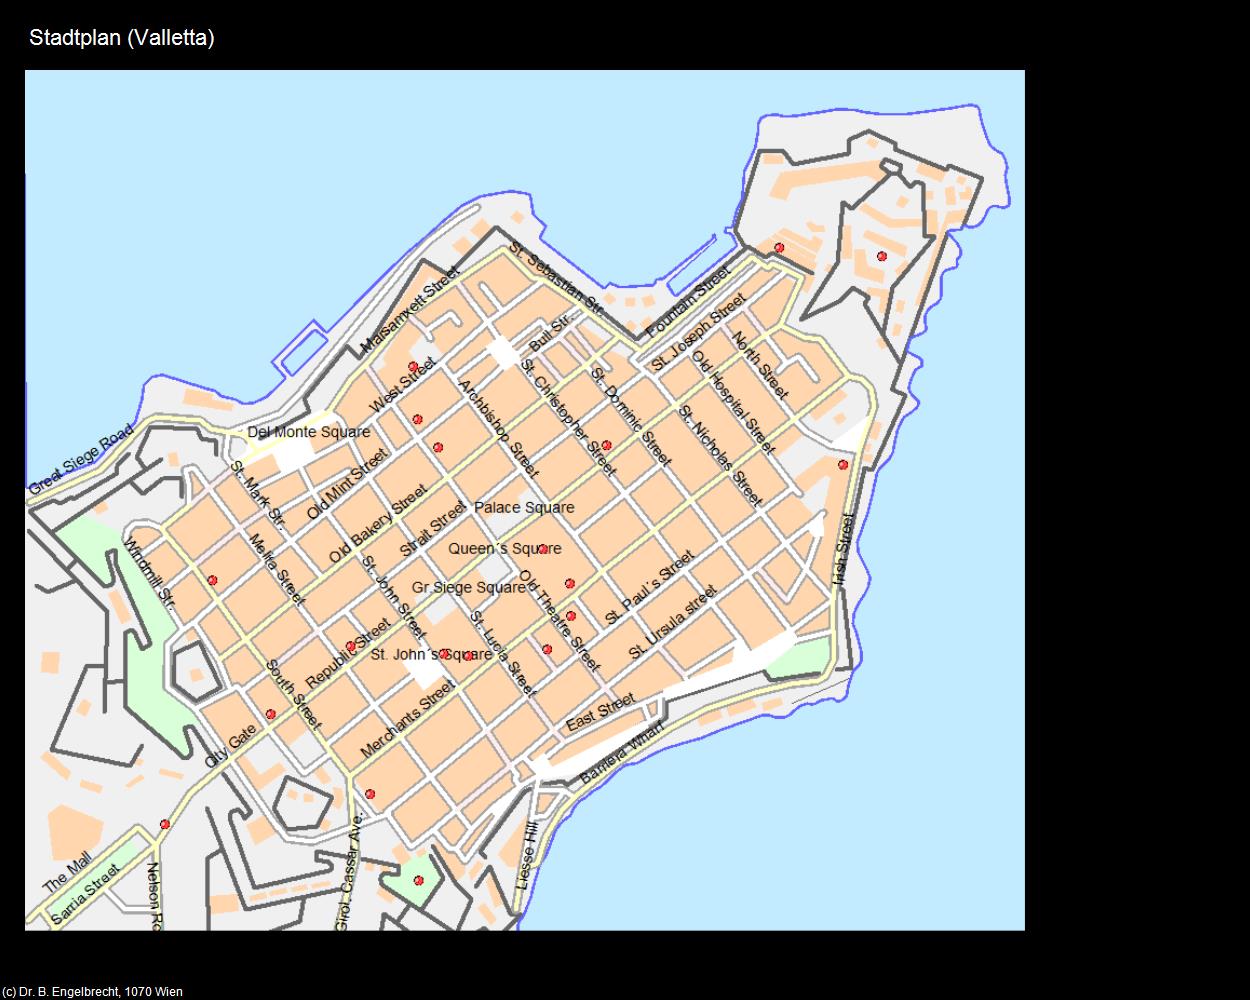 Stadtplan (Valletta auf Malta) in Malta - Perle im Mittelmeer